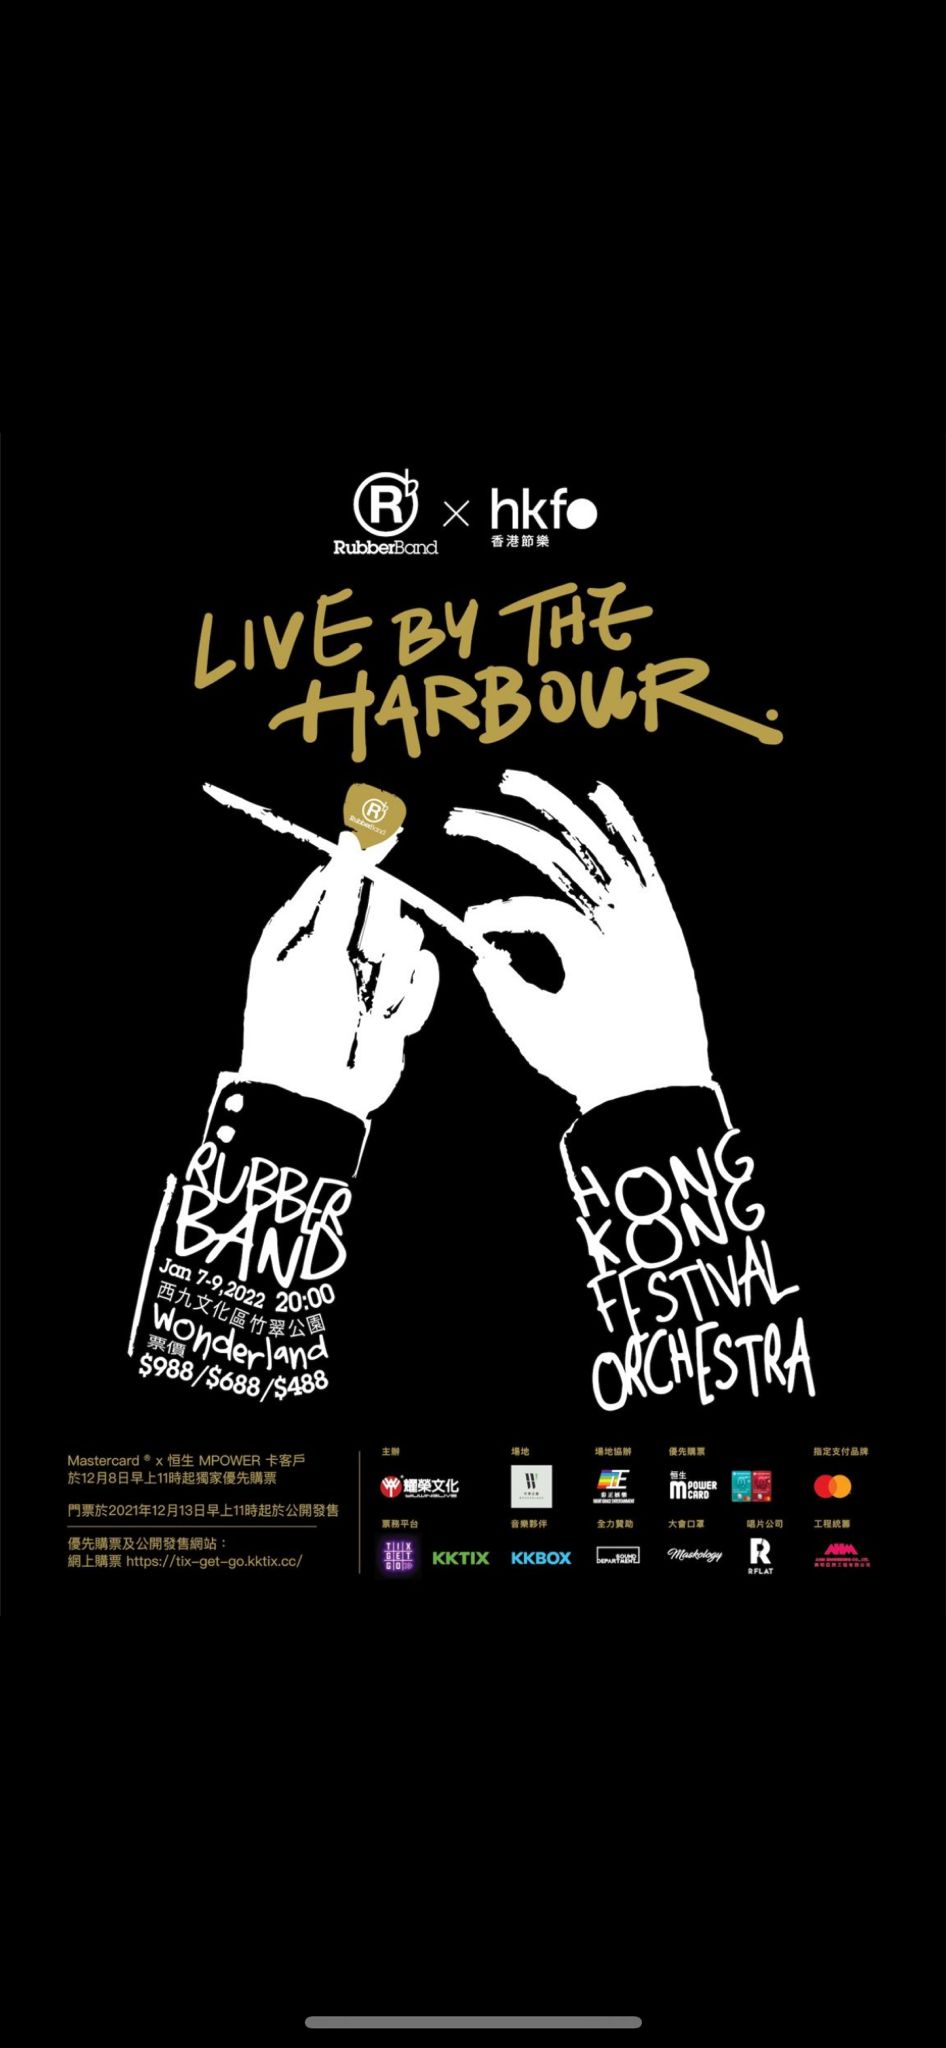 RubberBand x 香港節慶管弦樂團 「Liveby the Harbour」• 音樂會將會延期。